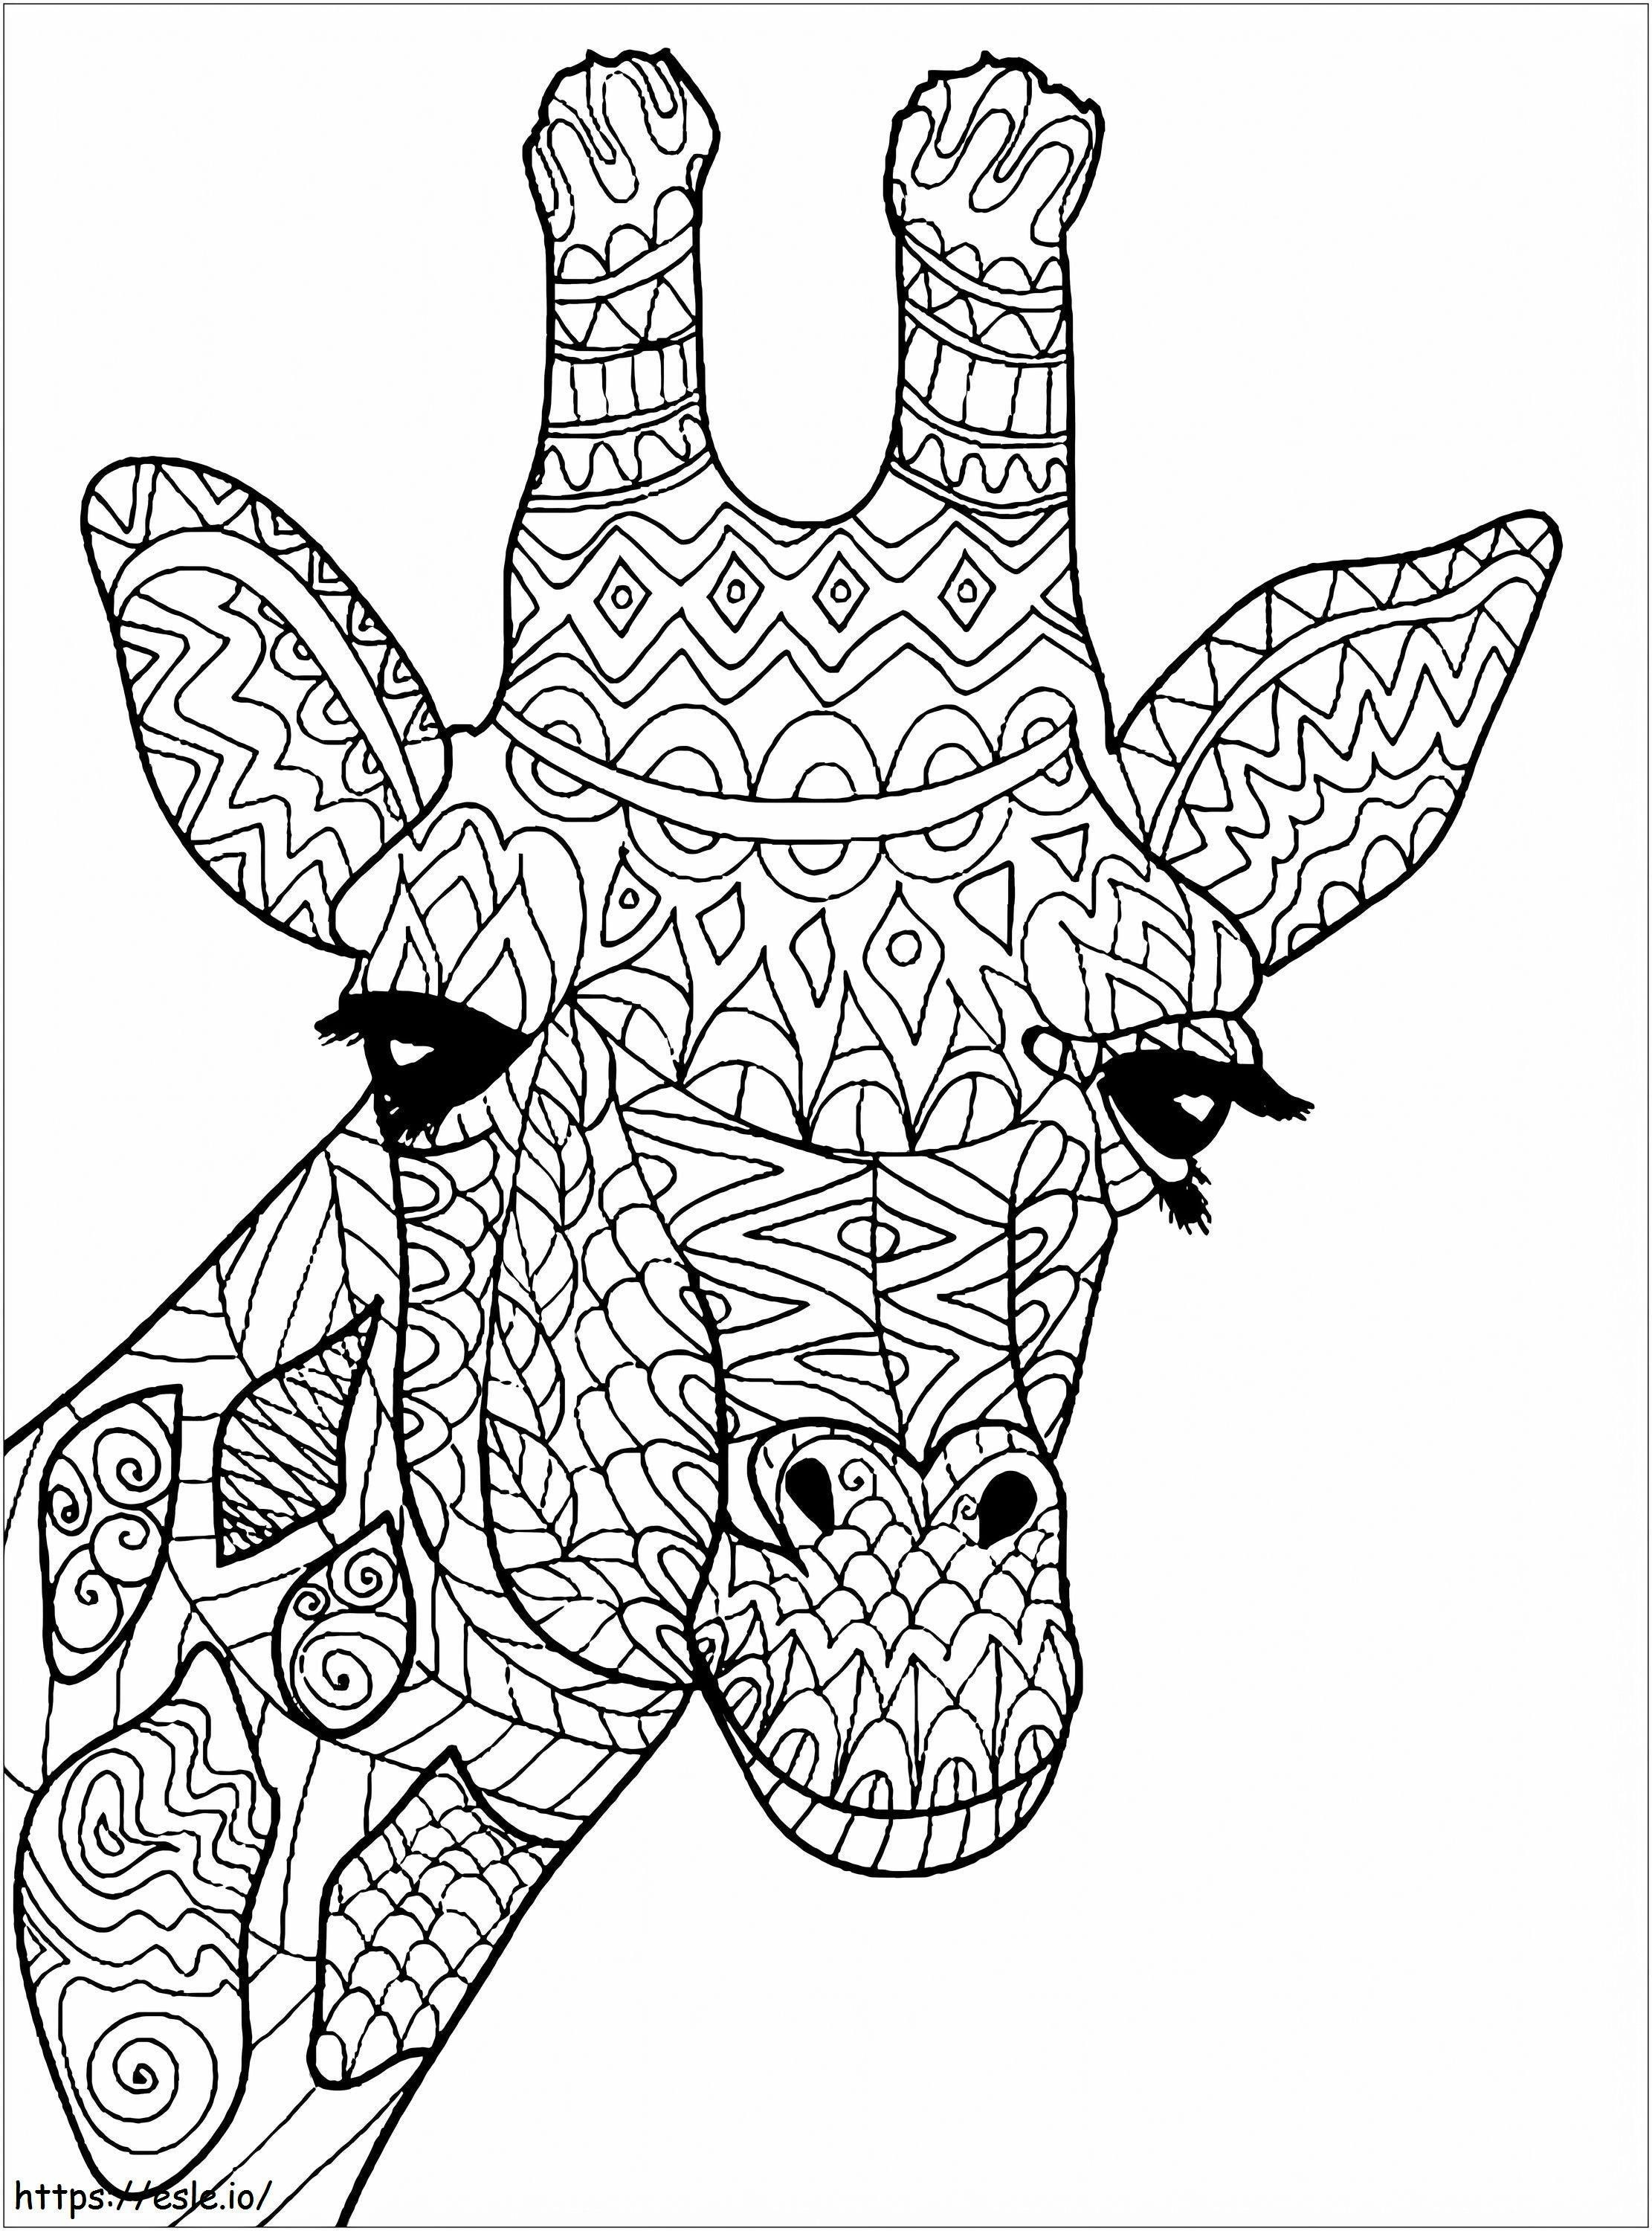 Giraffe Head Mandala coloring page